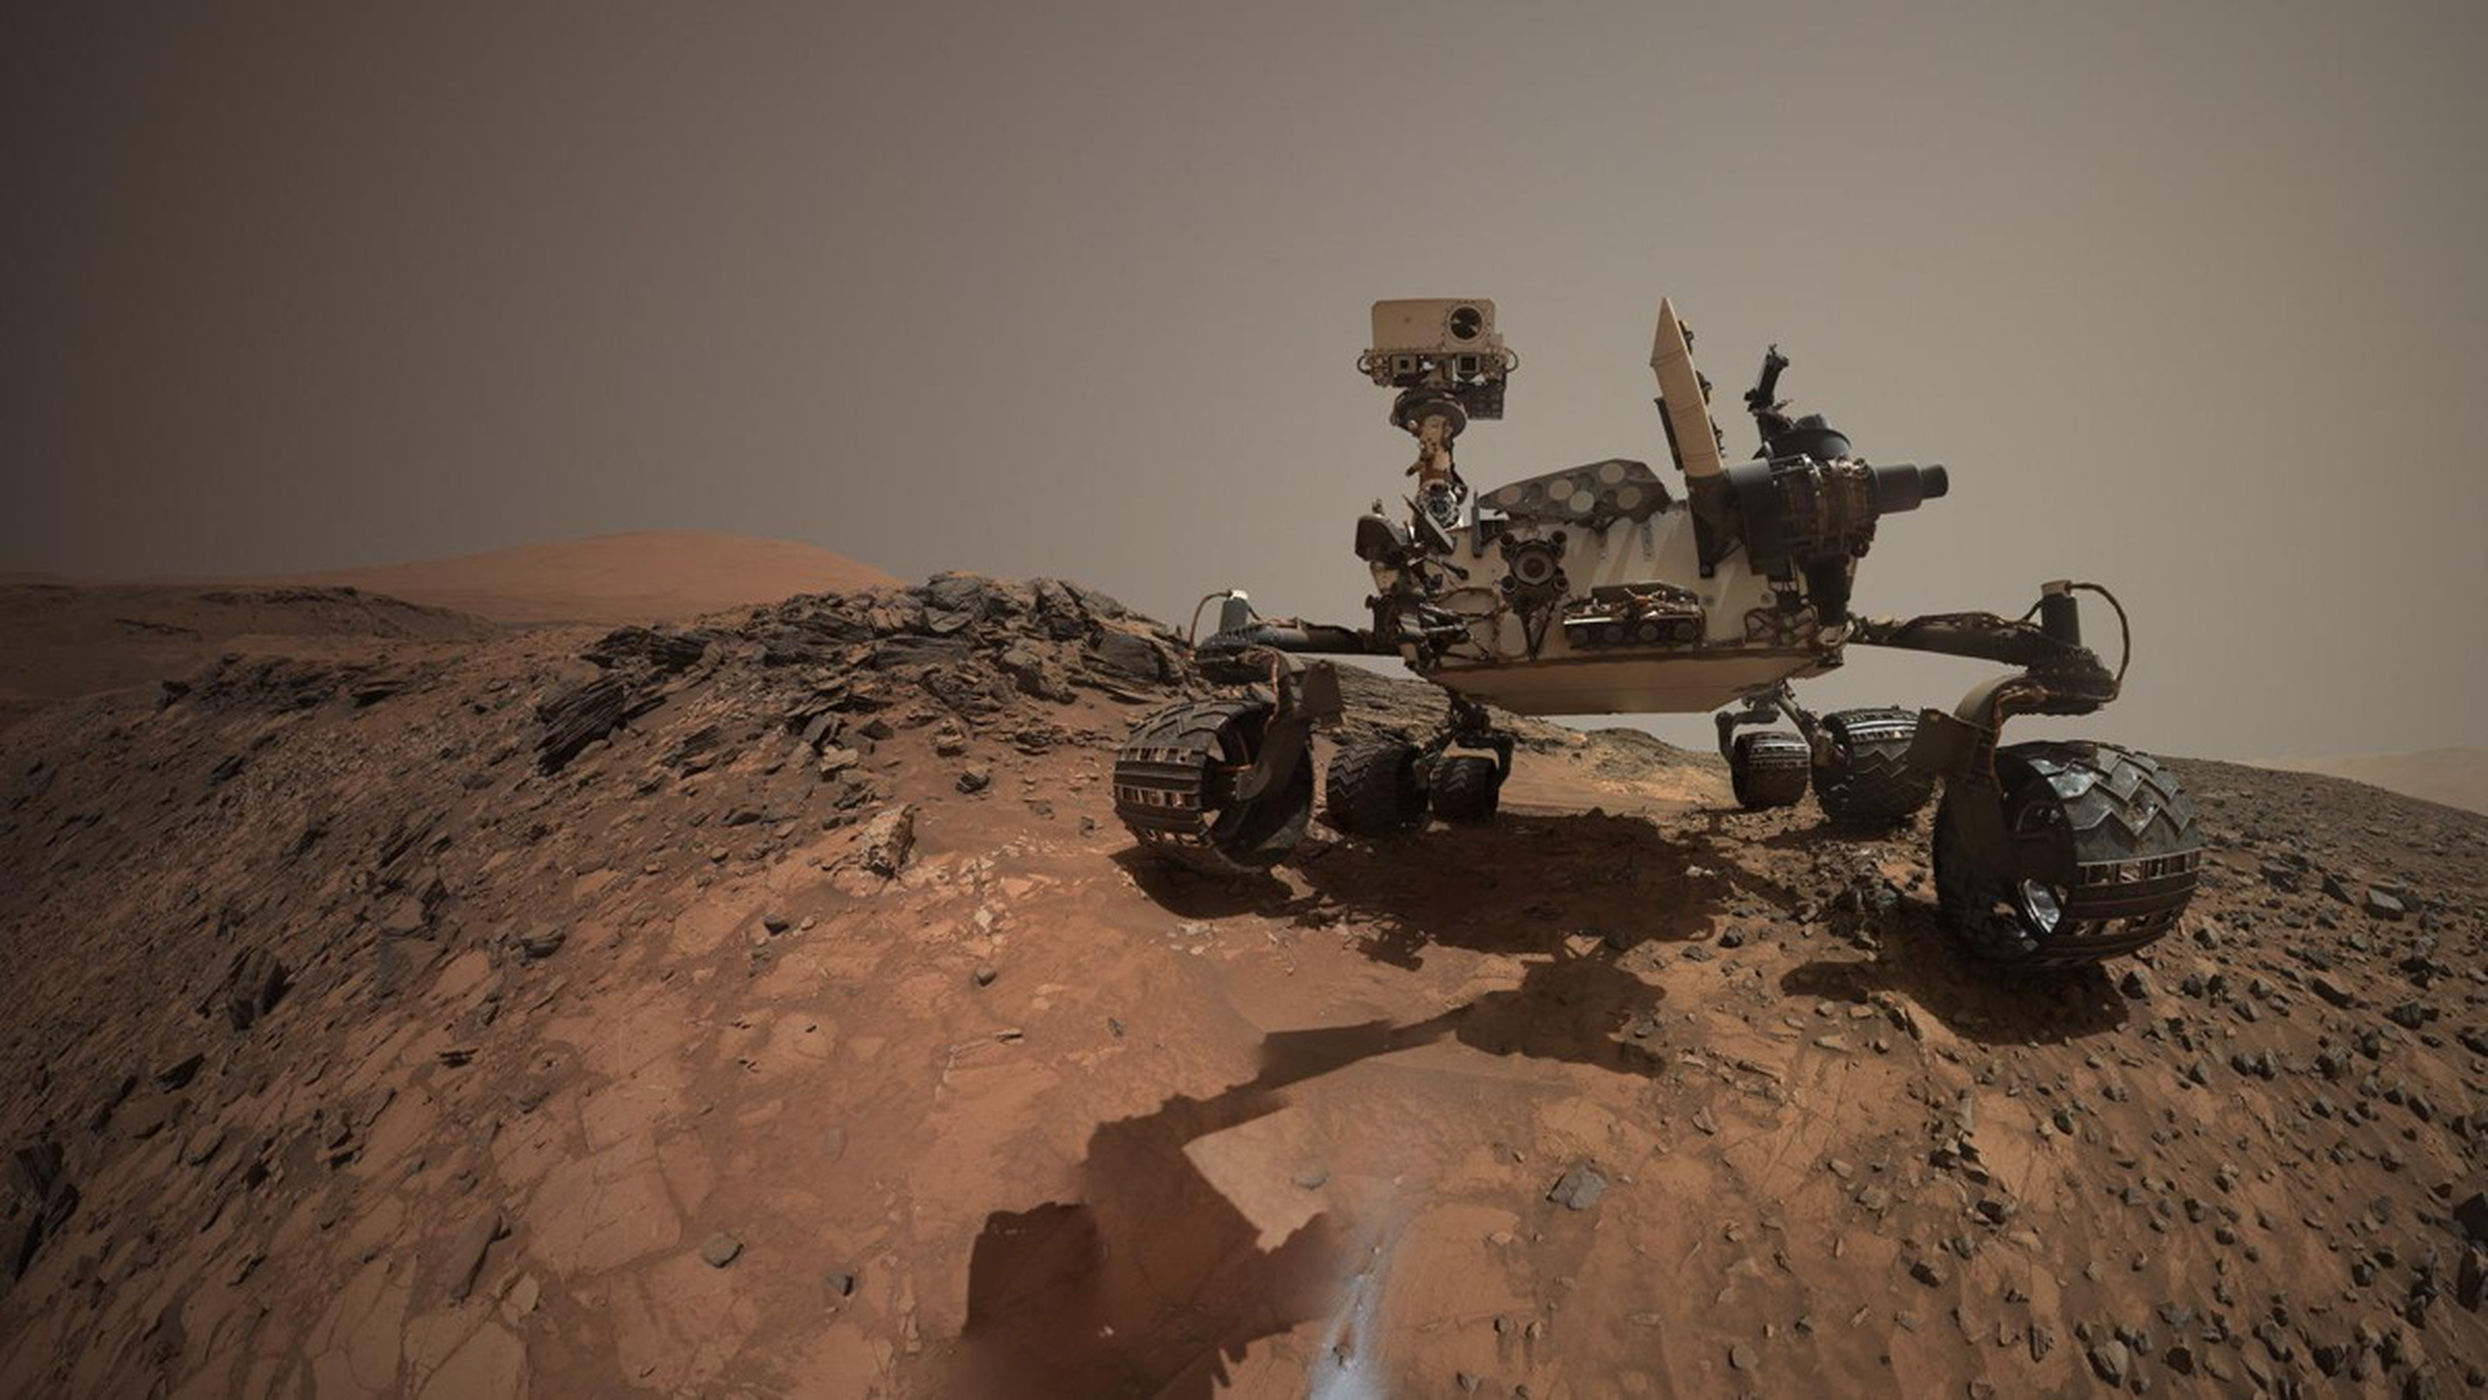 curiosity-rover-self-portrait-aug-5-2015